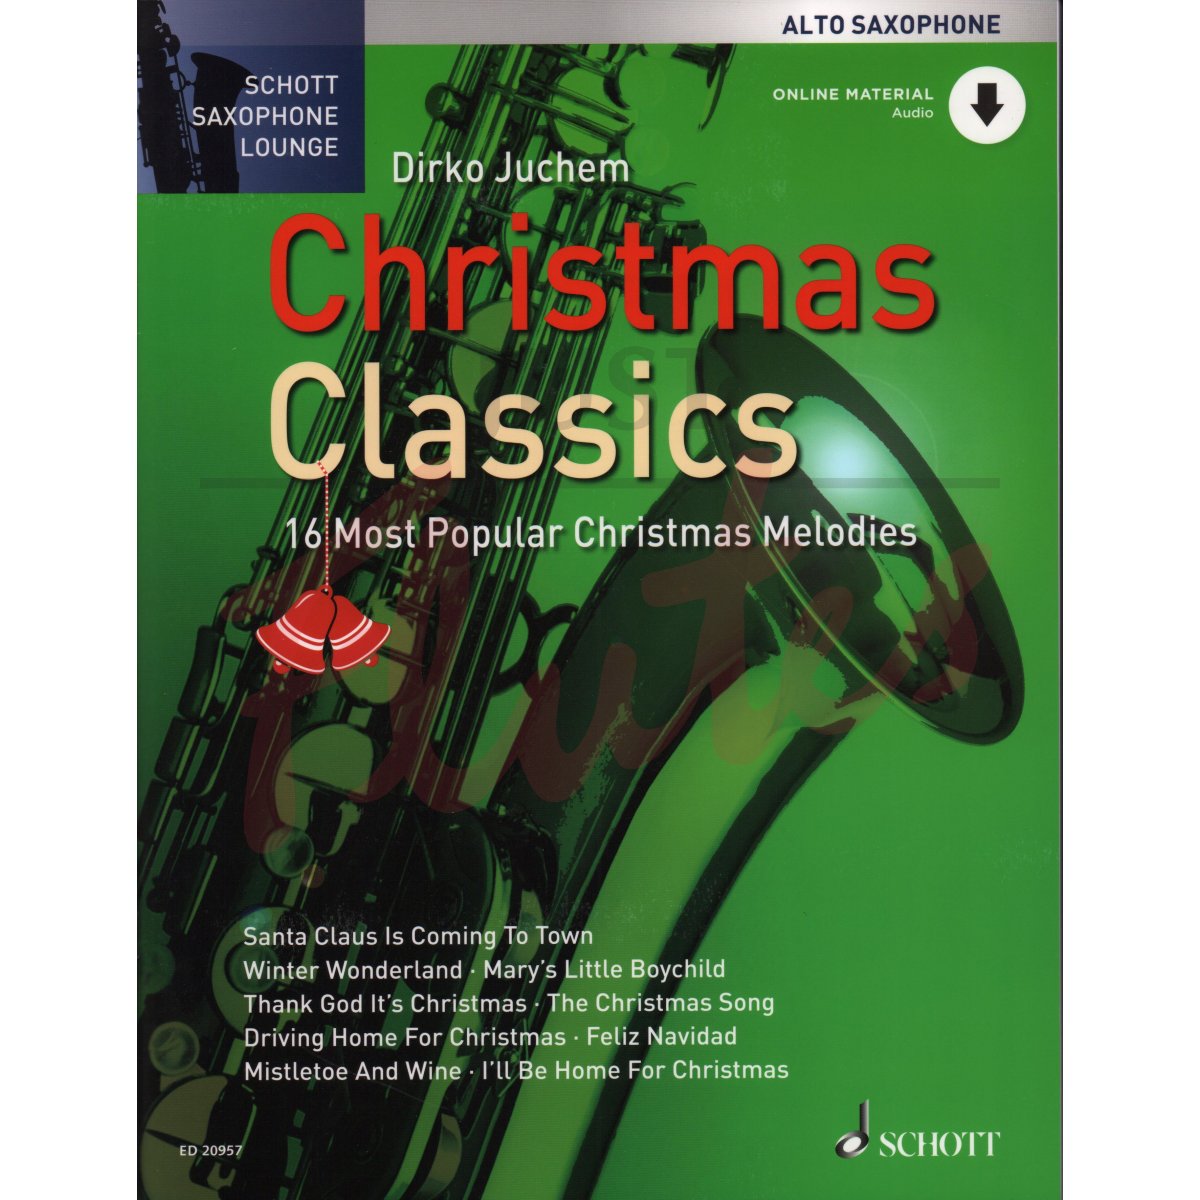 Schott Saxophone Lounge: Christmas Classics [Alto Sax]